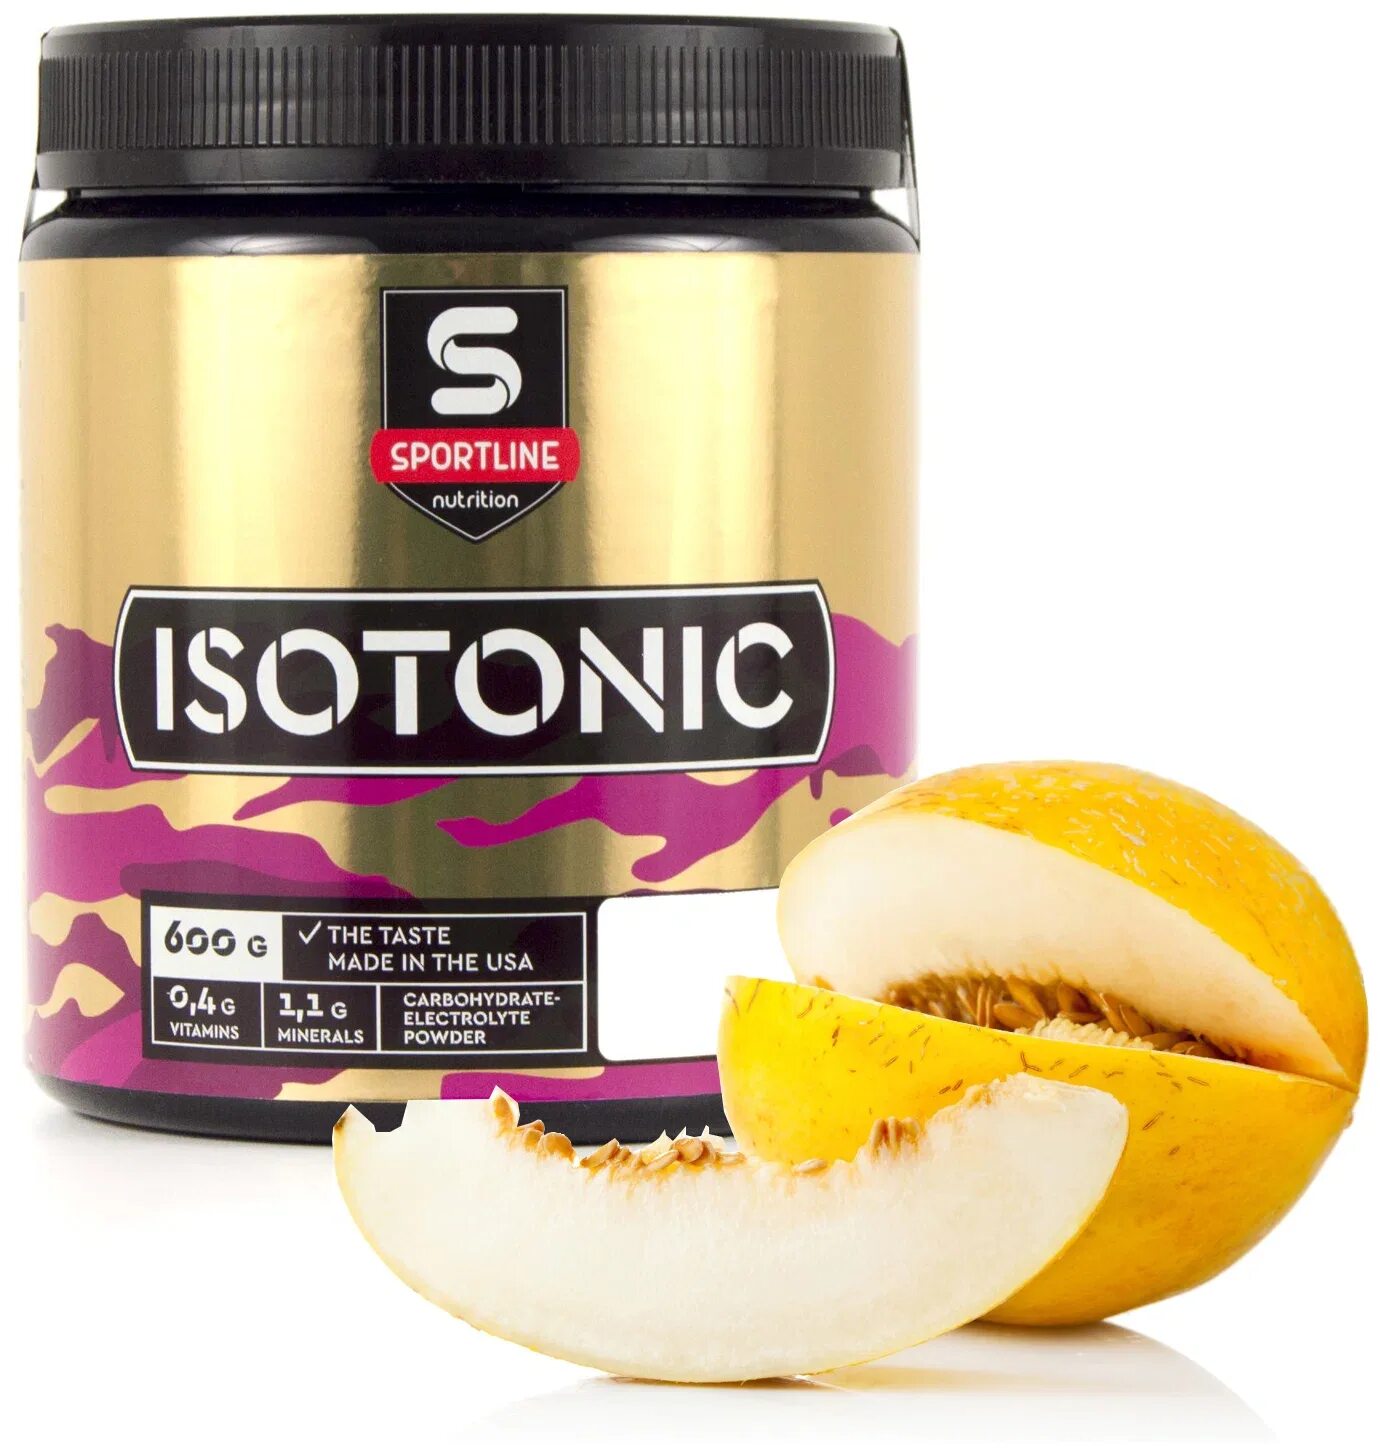 Sportline Nutrition Isotonic. Sportline Nutrition Isotonic напиток. S Sportline изотоник. Sportline отзывы. 400 грамм дыни